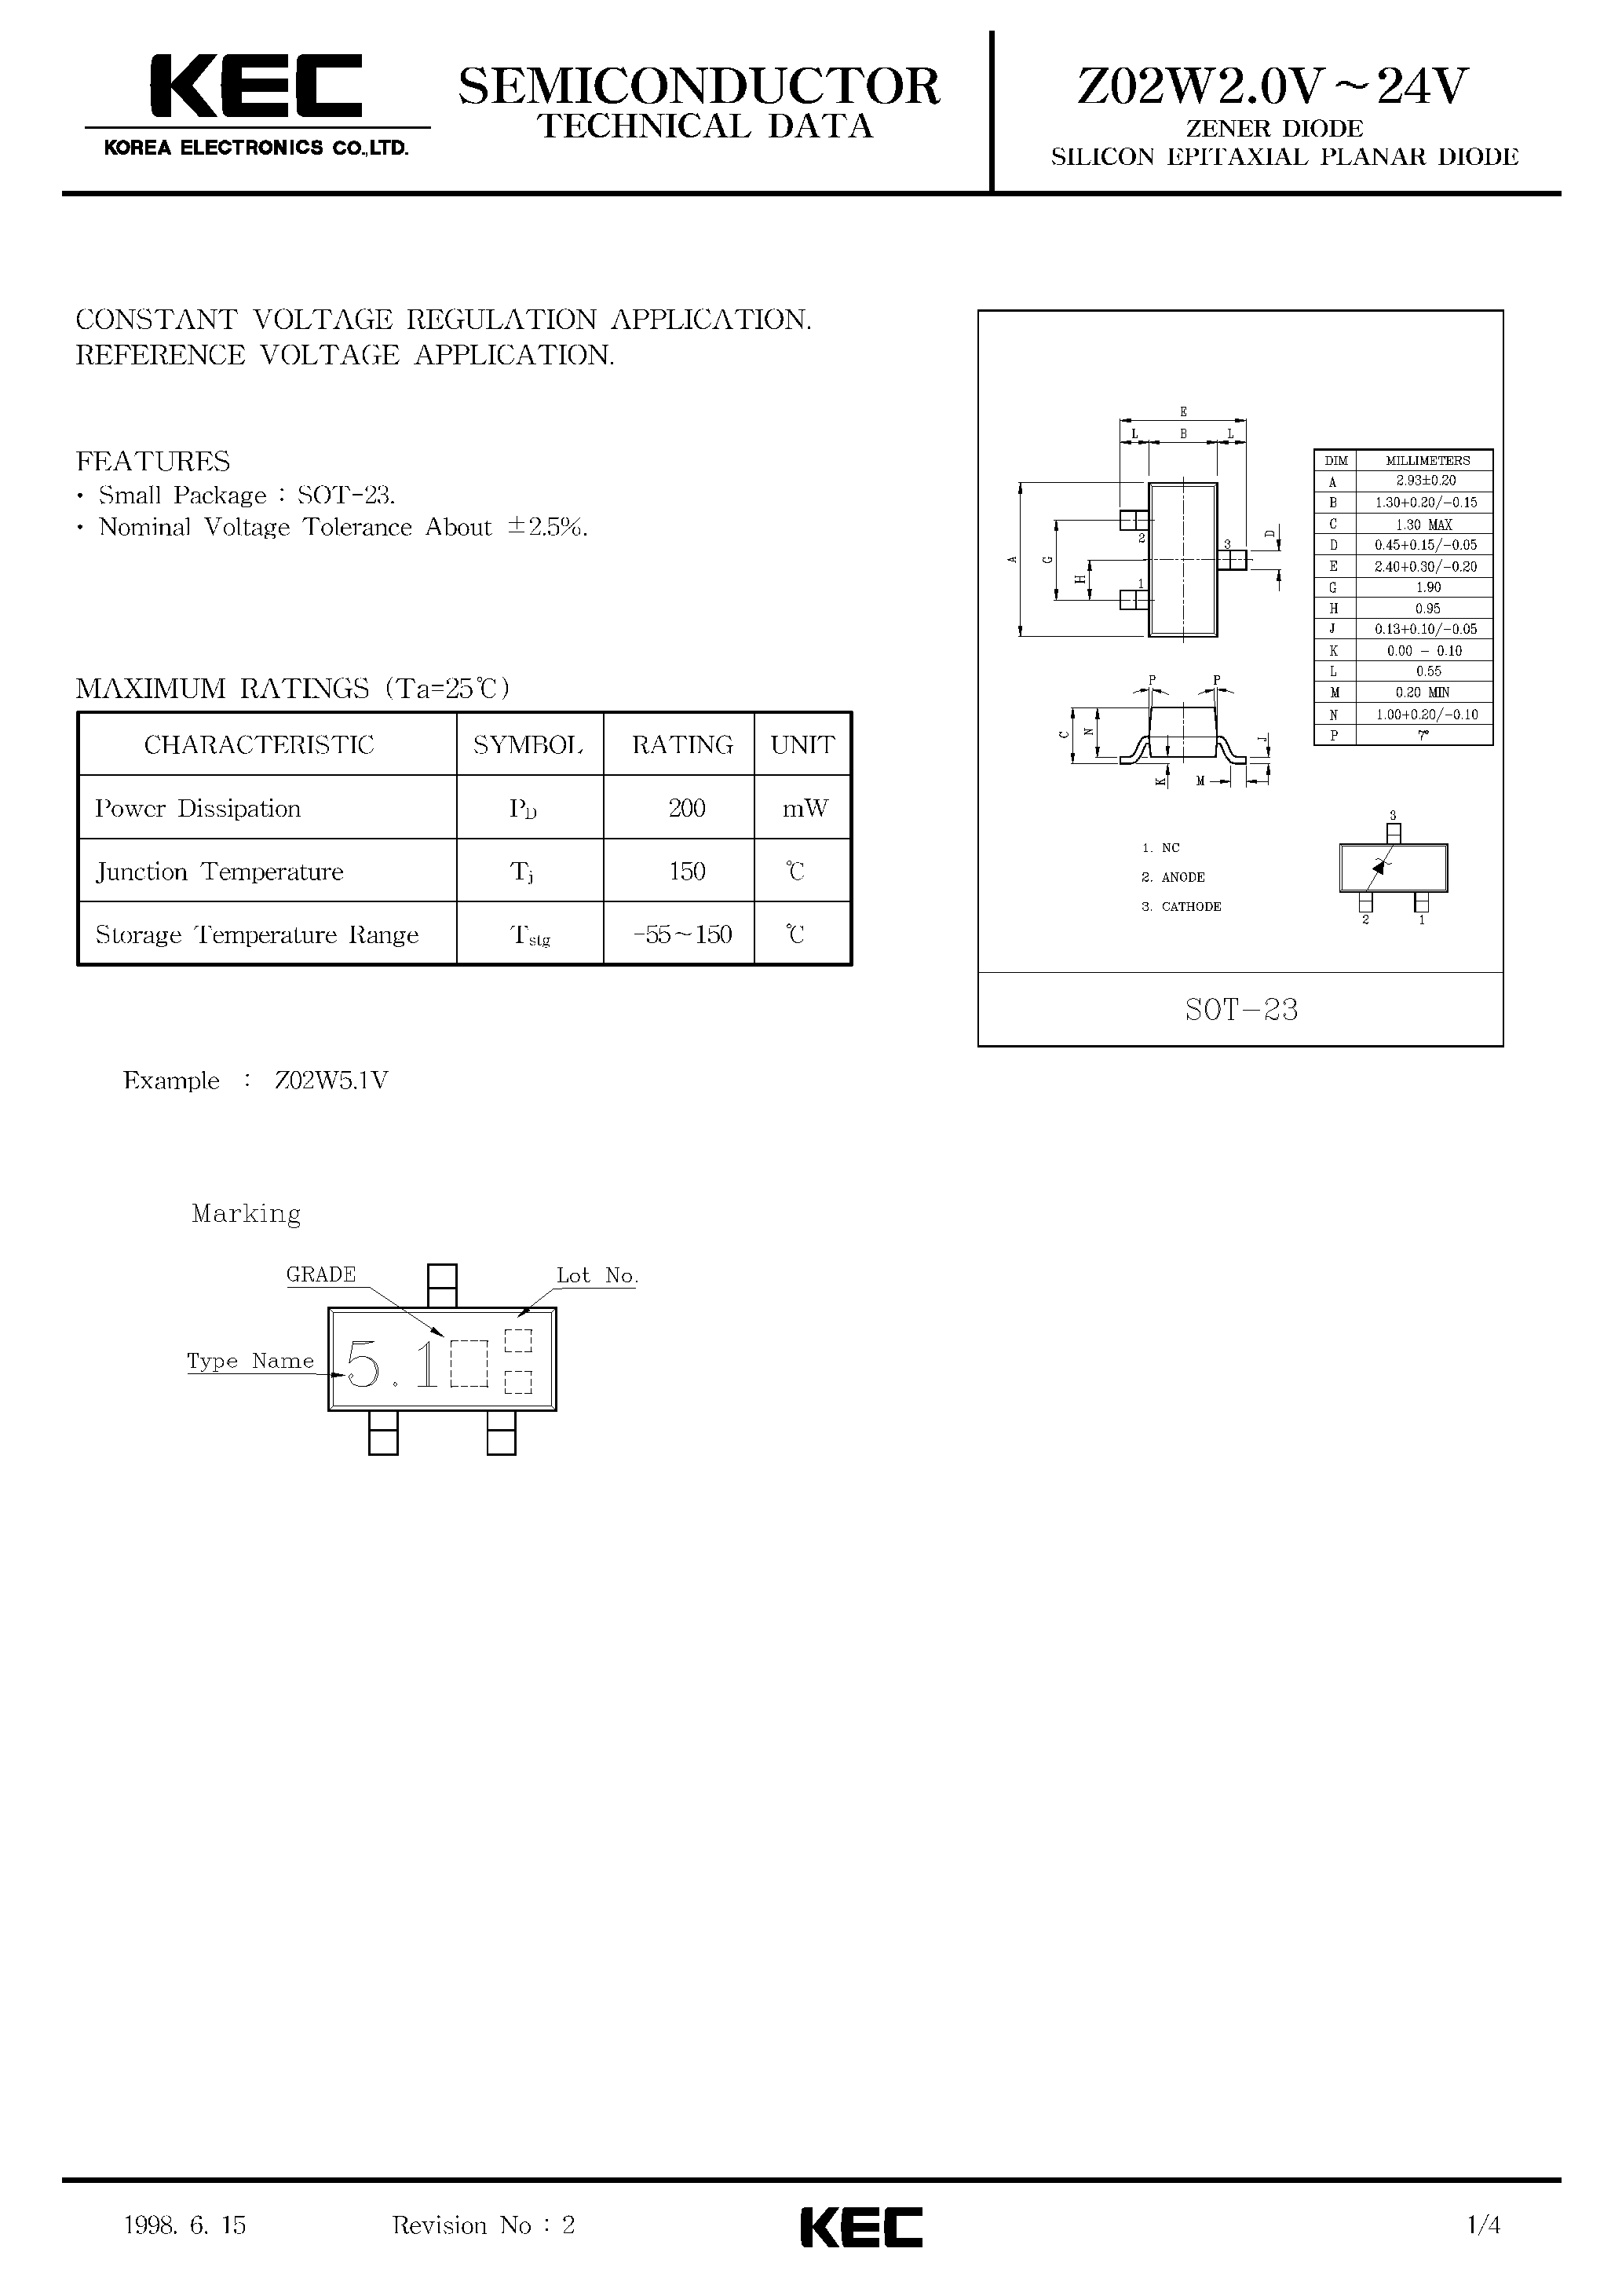 Datasheet Z02W43V - ZENER DIODE SILICON EPITAXIAL PLANAR DIODE (CONSTANT VOLTAGE REGULATION/ REFERENCE VOLTAGE) page 1